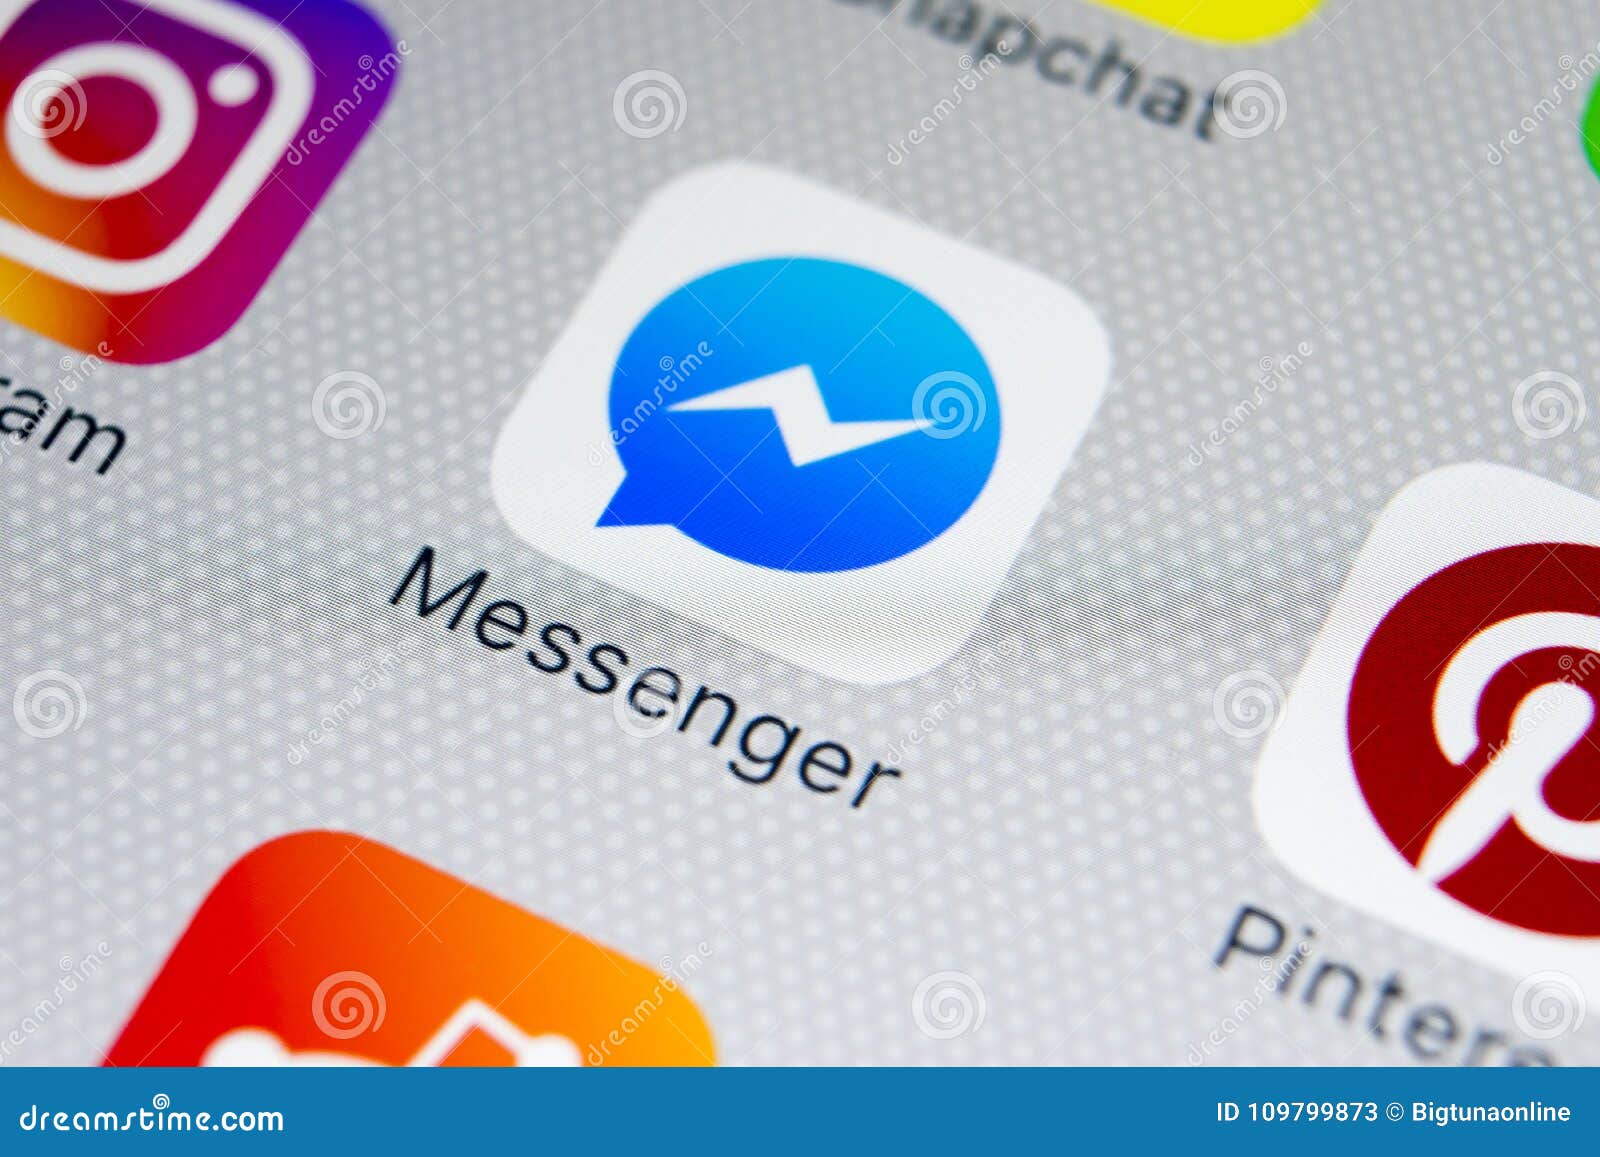 facebook messenger iphone icon